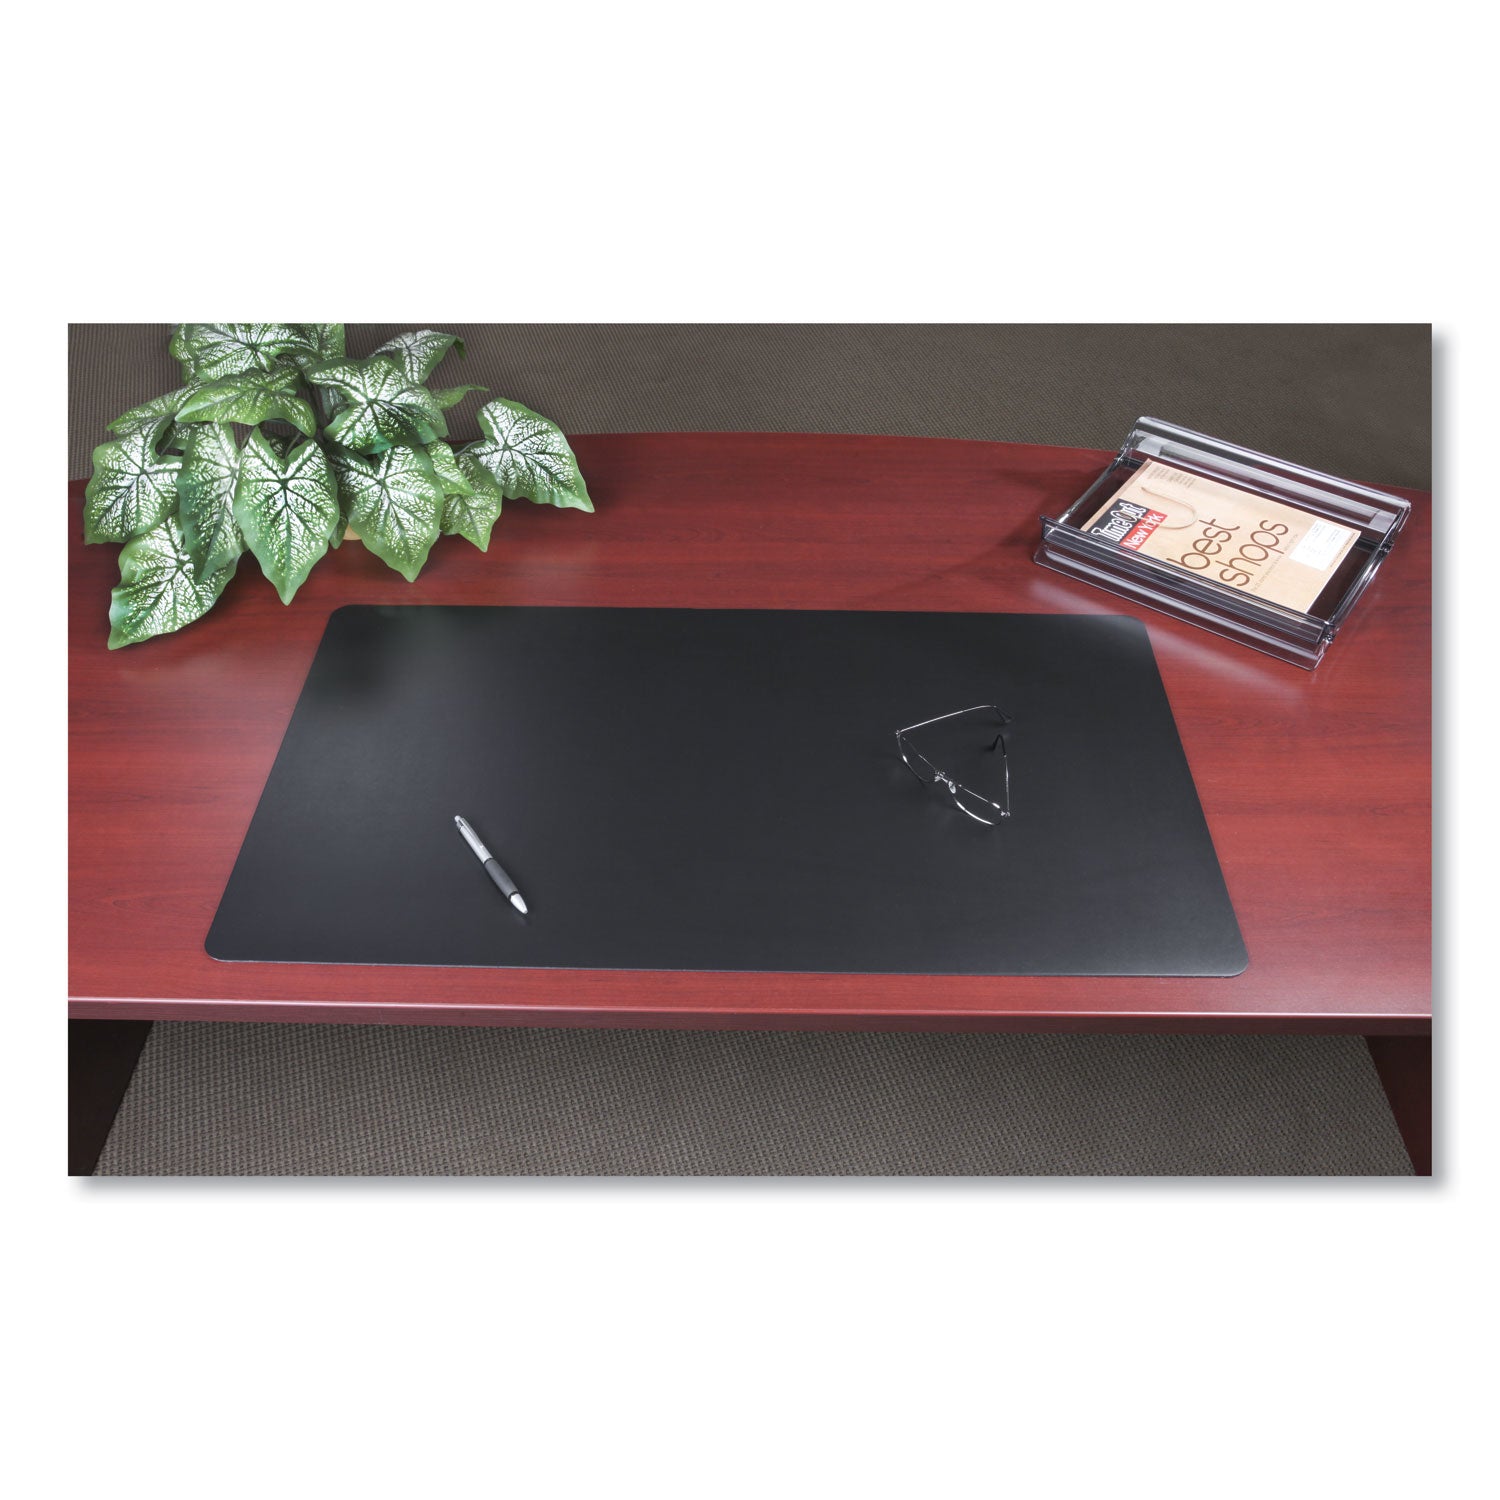 Rhinolin II Desk Pad with Antimicrobial Protection, 17 x 12, Black - 